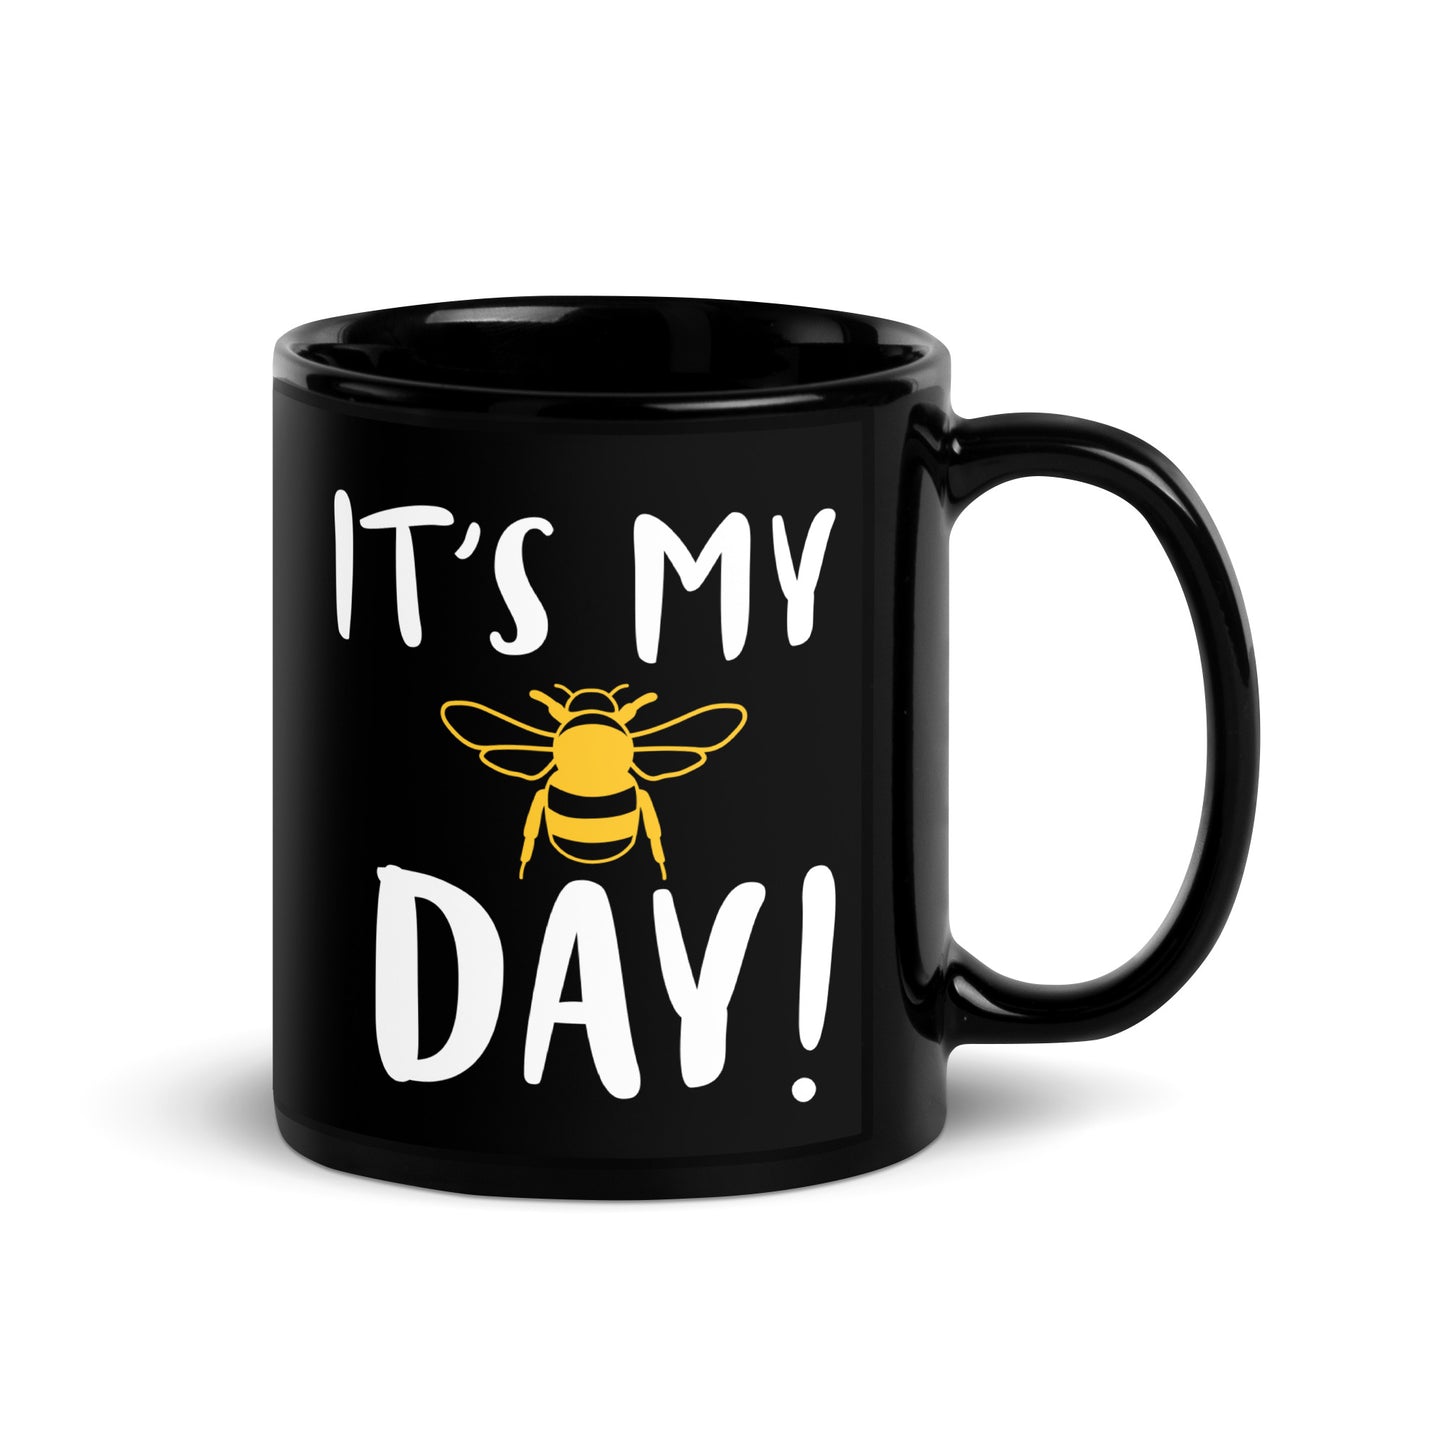 IT'S MY BEE DAY Glossy Mug